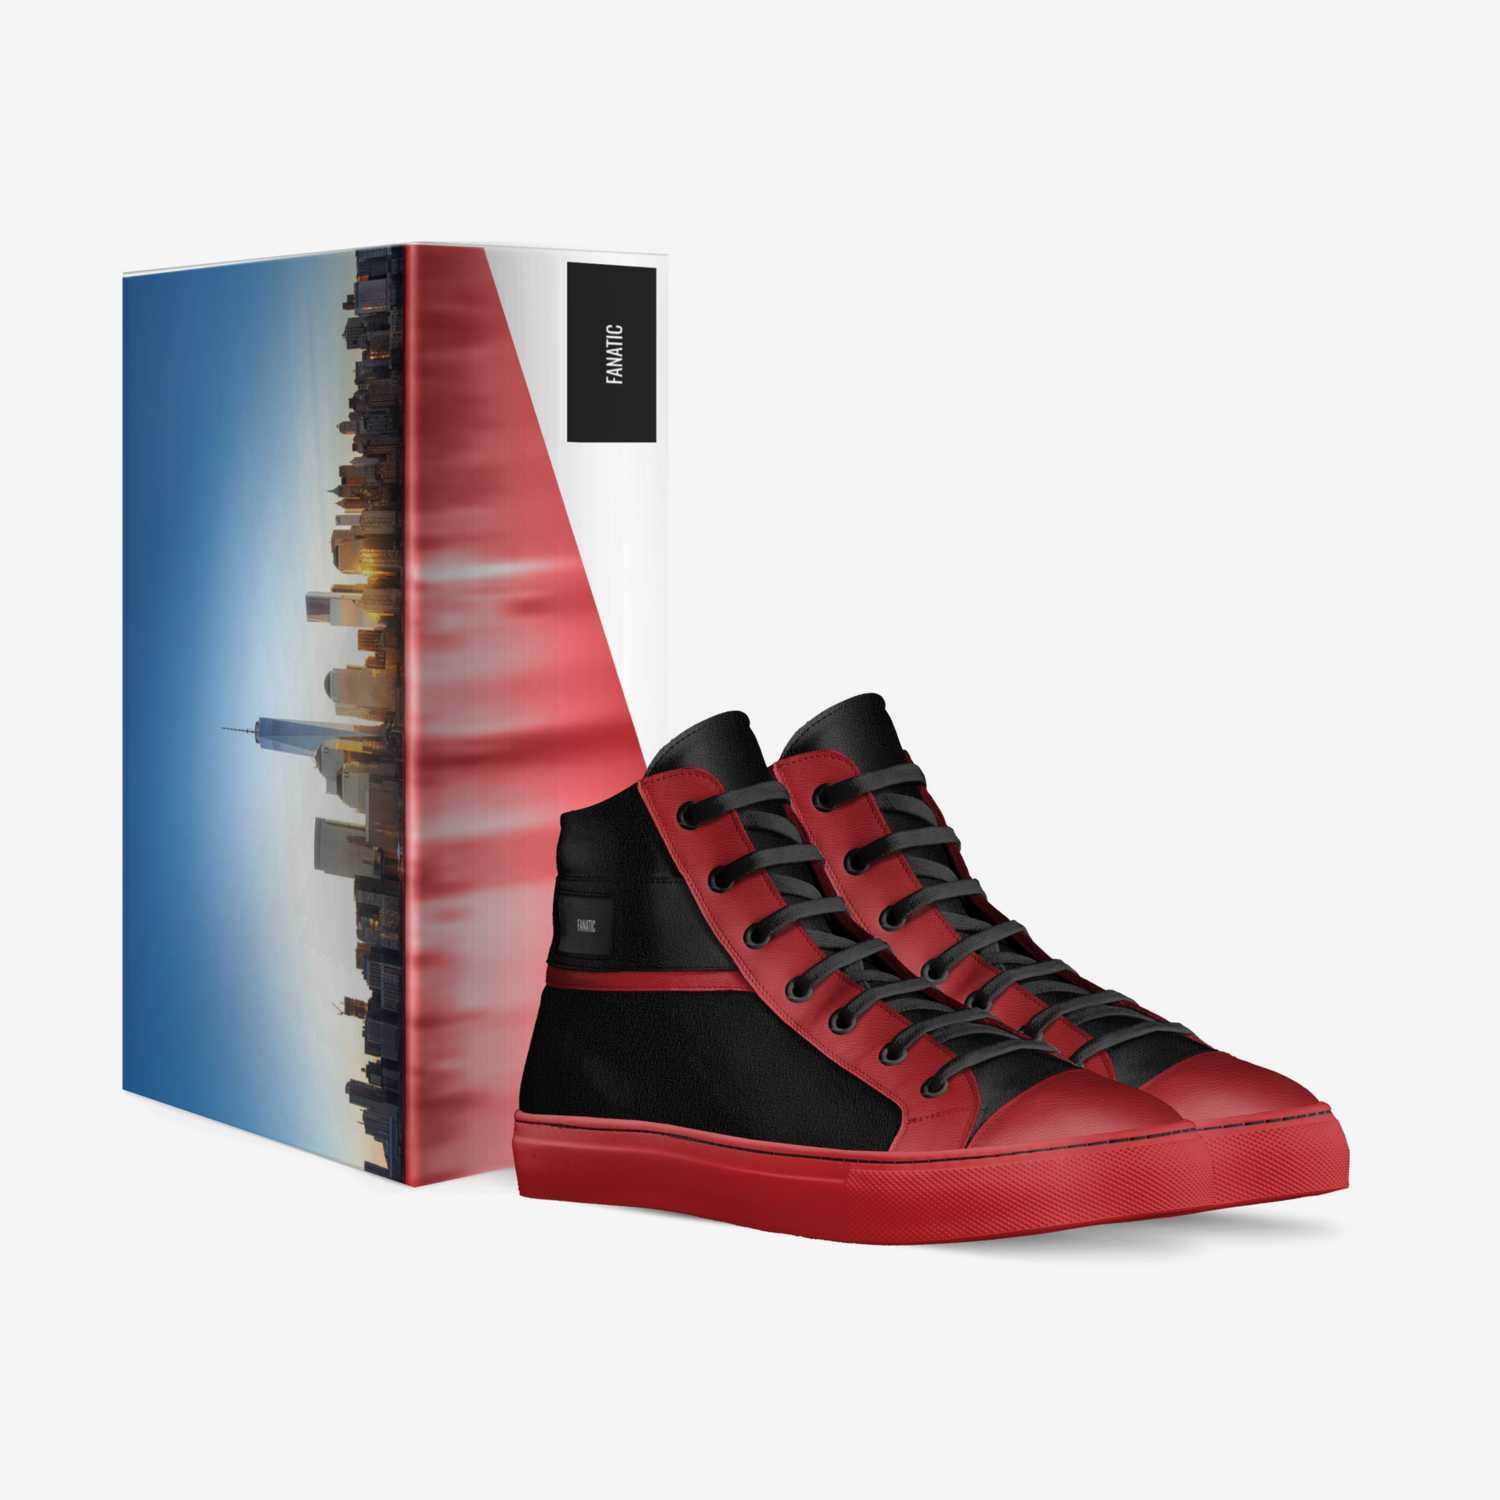 Fanatic custom made in Italy shoes by Lekoriana Graham | Box view